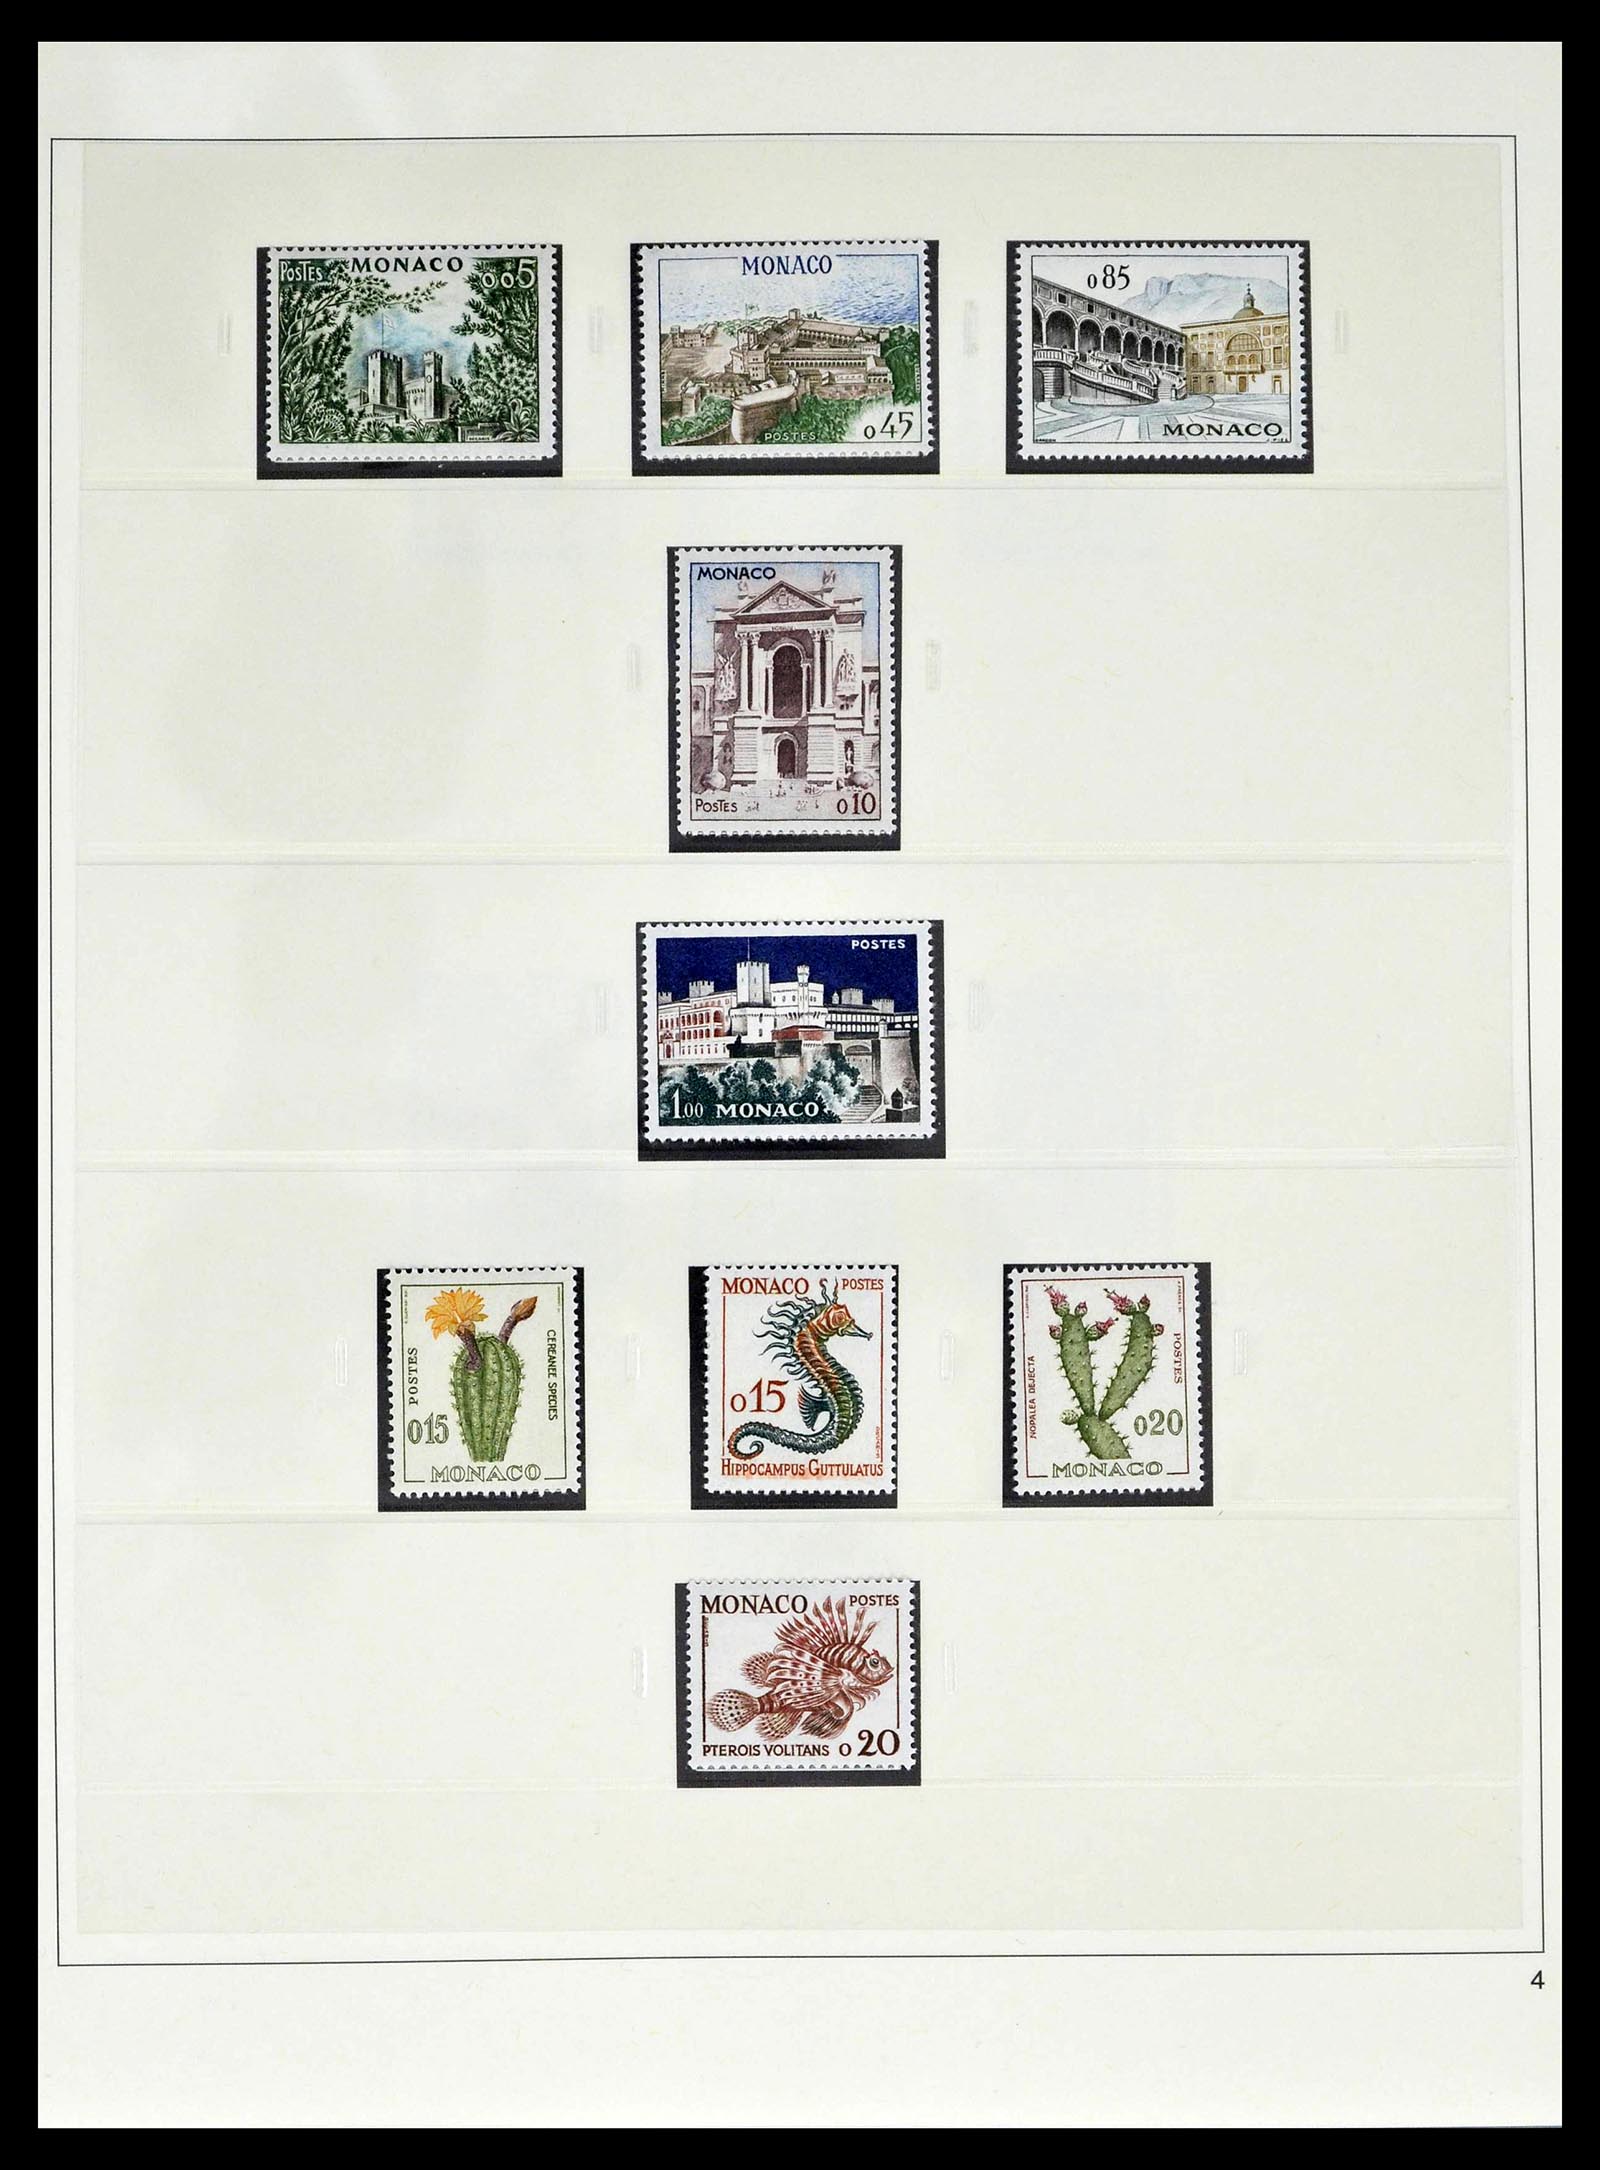 39211 0048 - Stamp collection 39211 Monaco 1885-1983.